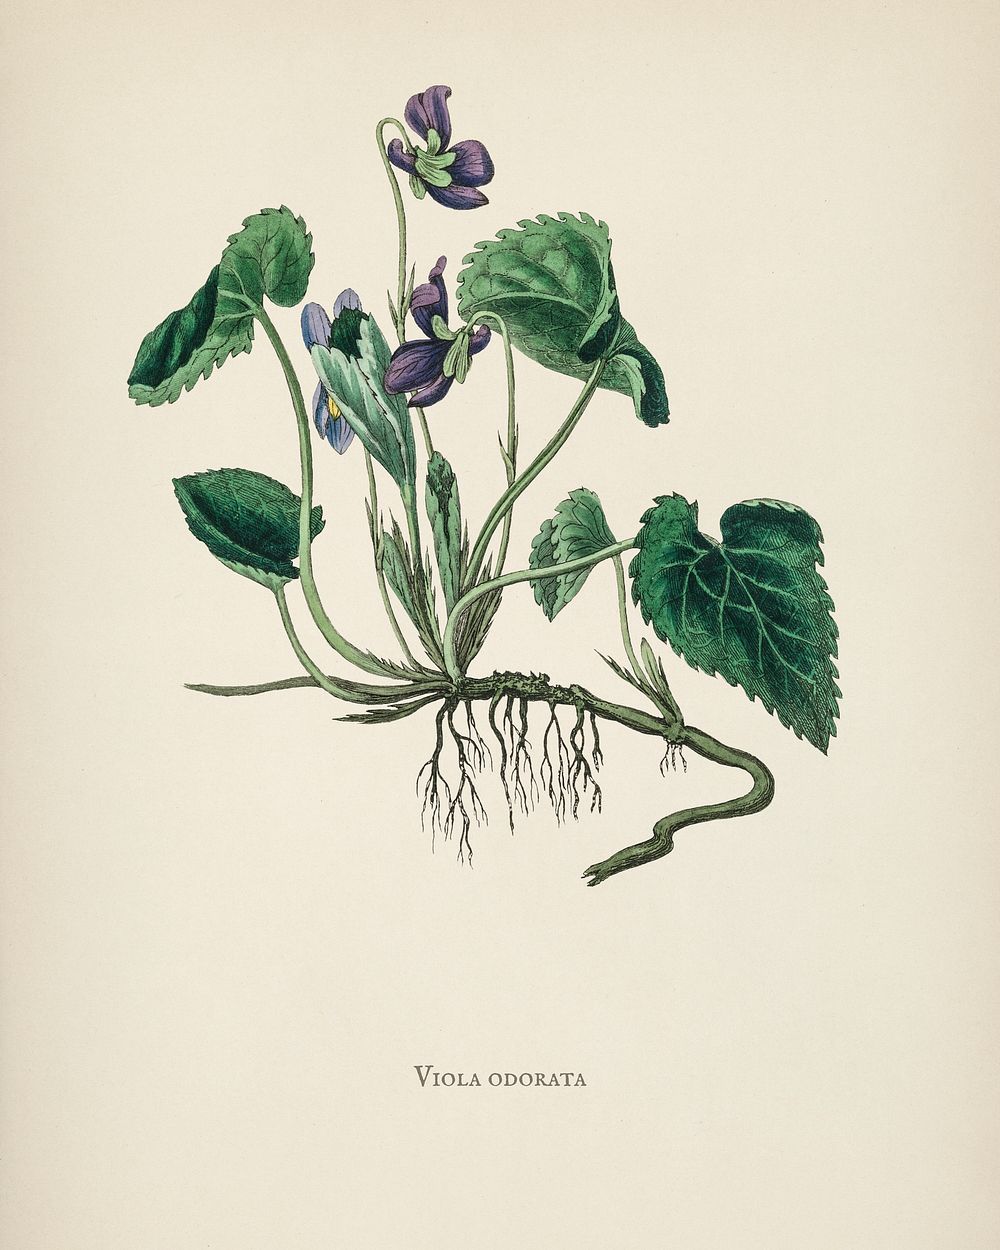 English violet (Viola odorata) illustration from Medical Botany (1836) by John Stephenson and James Morss Churchill.